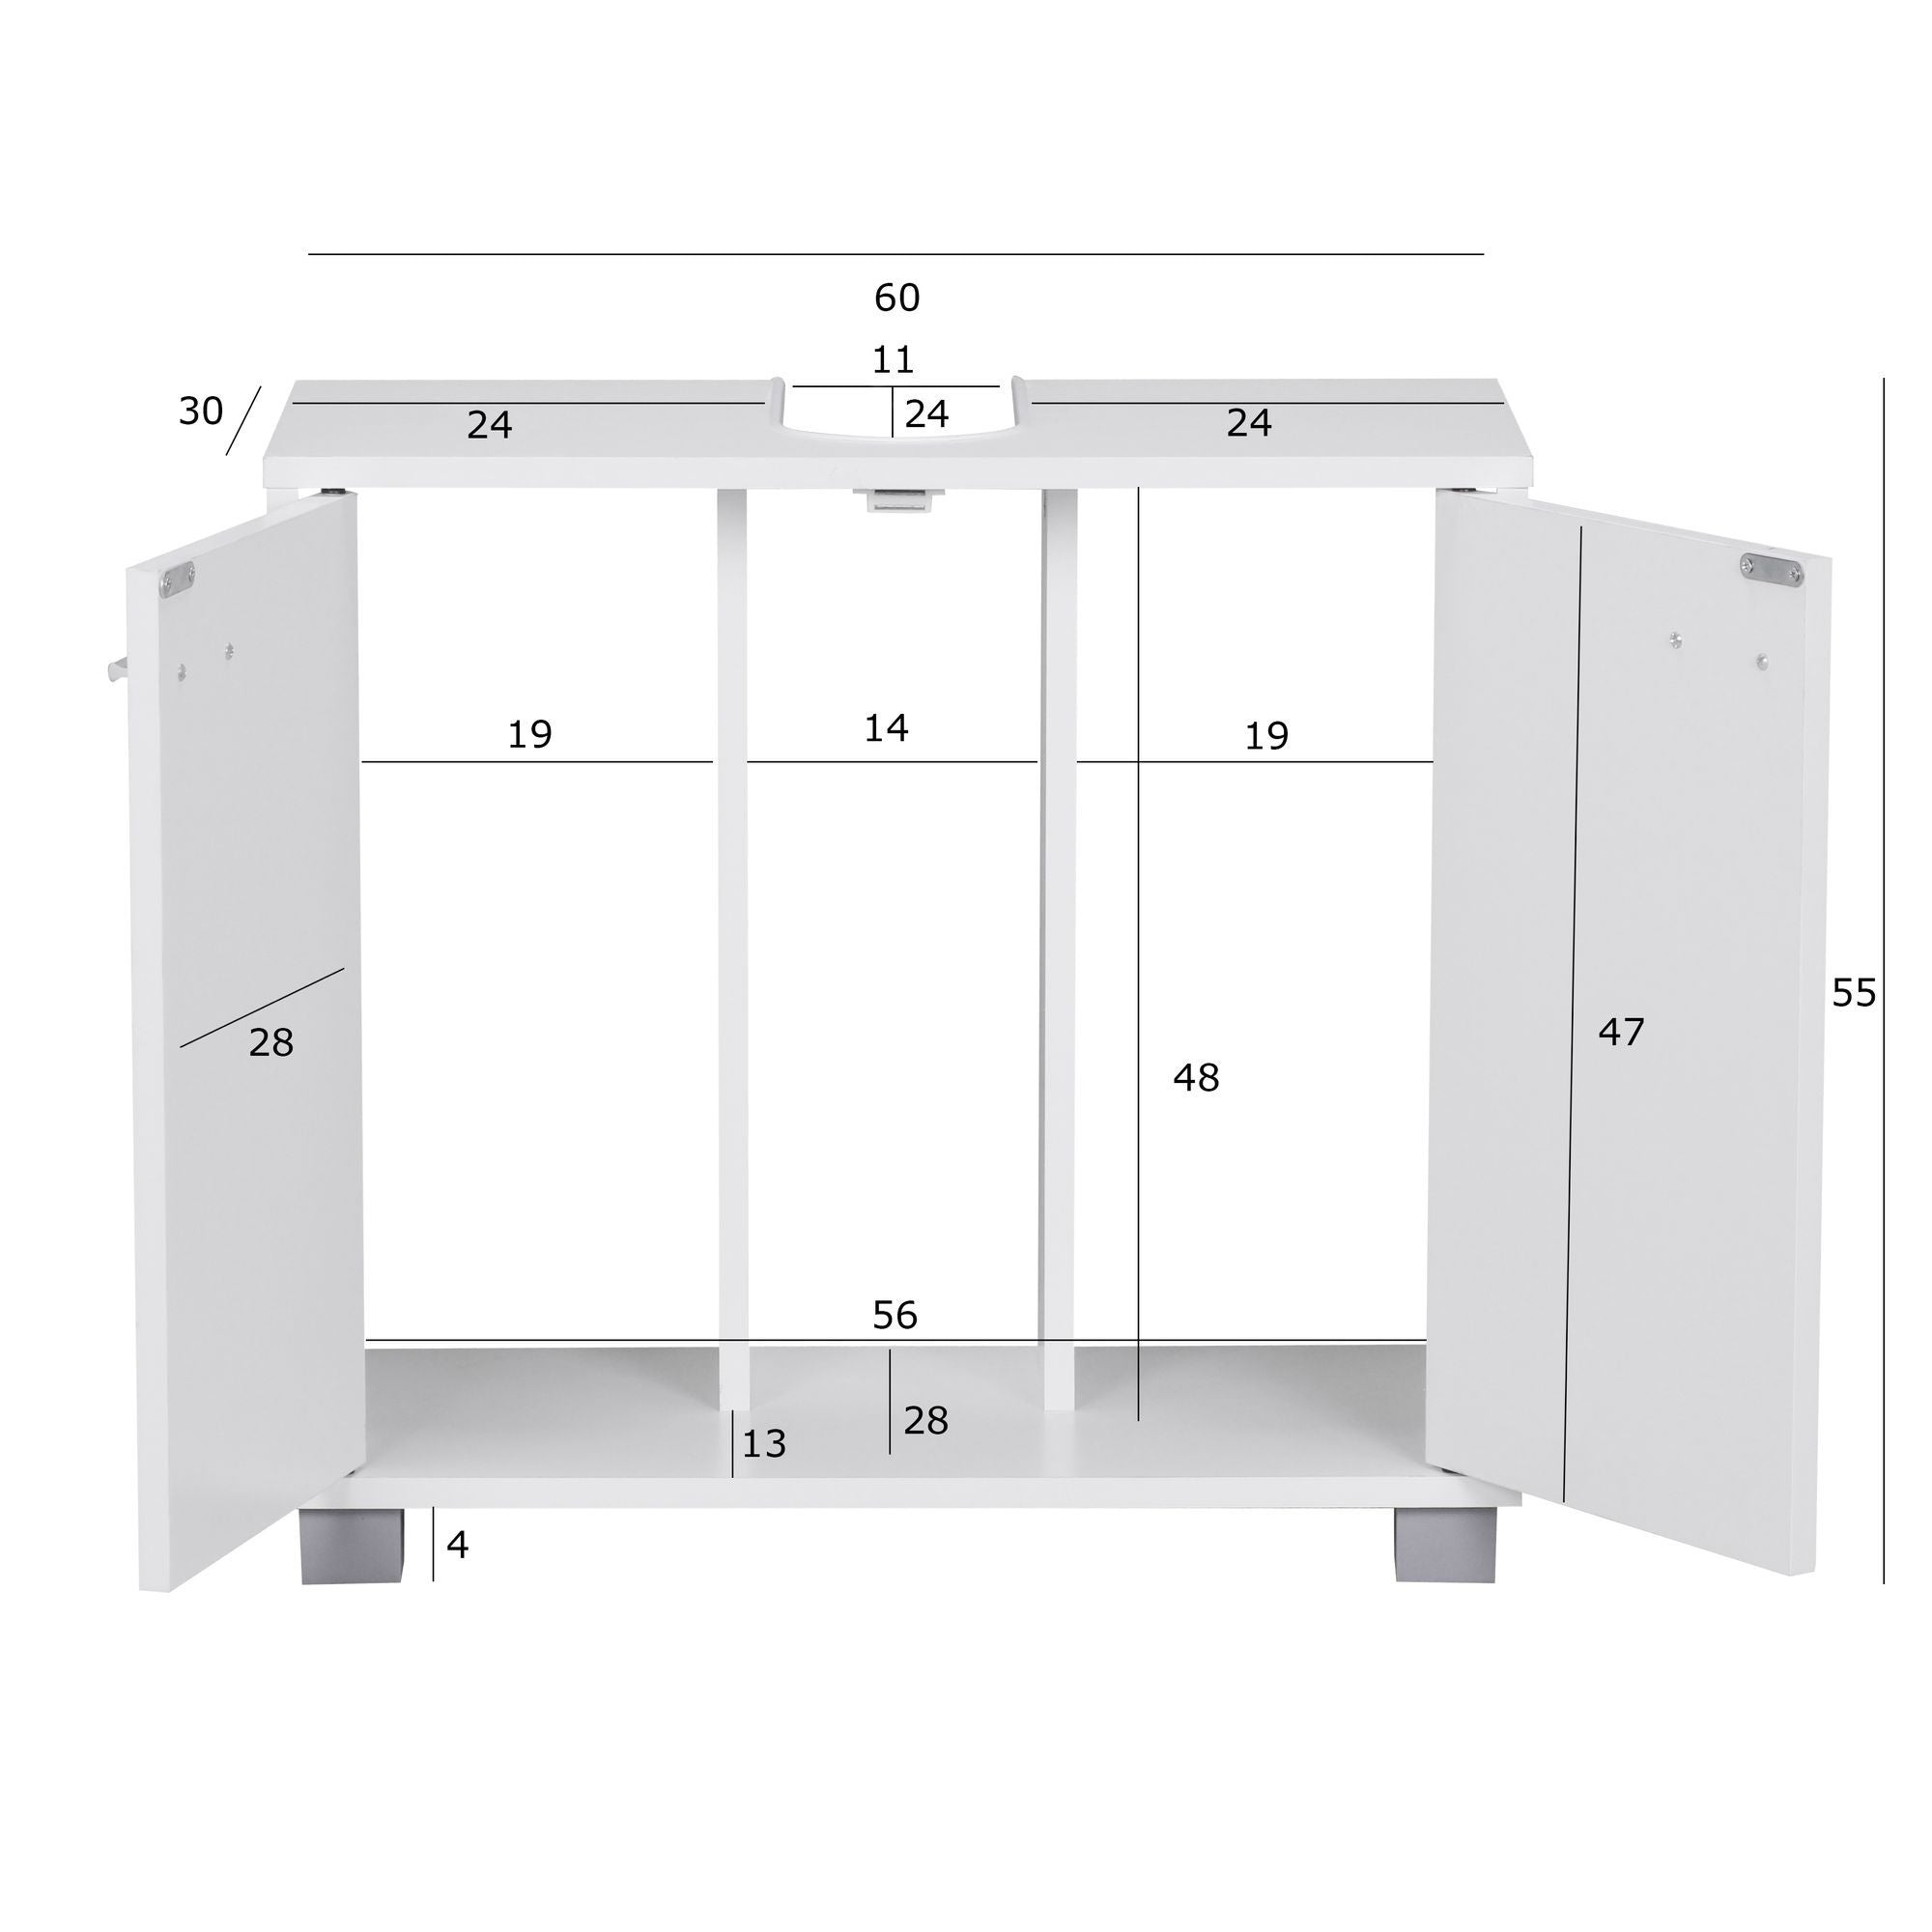 Nancy's Artesia Bathroom cabinet - Bathroom furniture - Bathroom furniture - Storage space - White